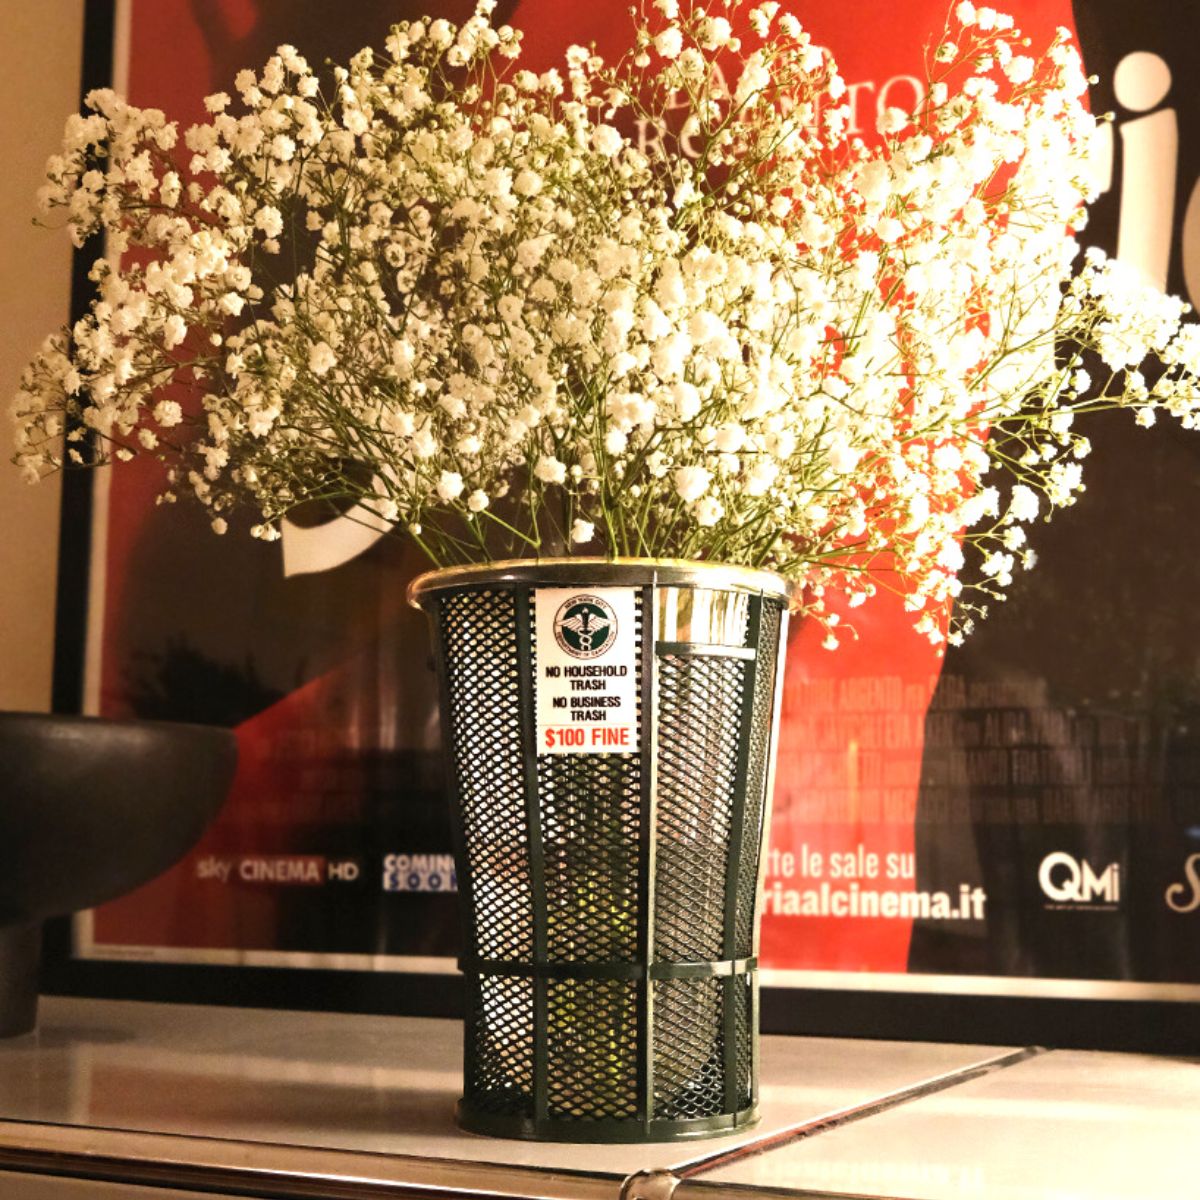 Chris Luu creates flower vase trashcan concept featured